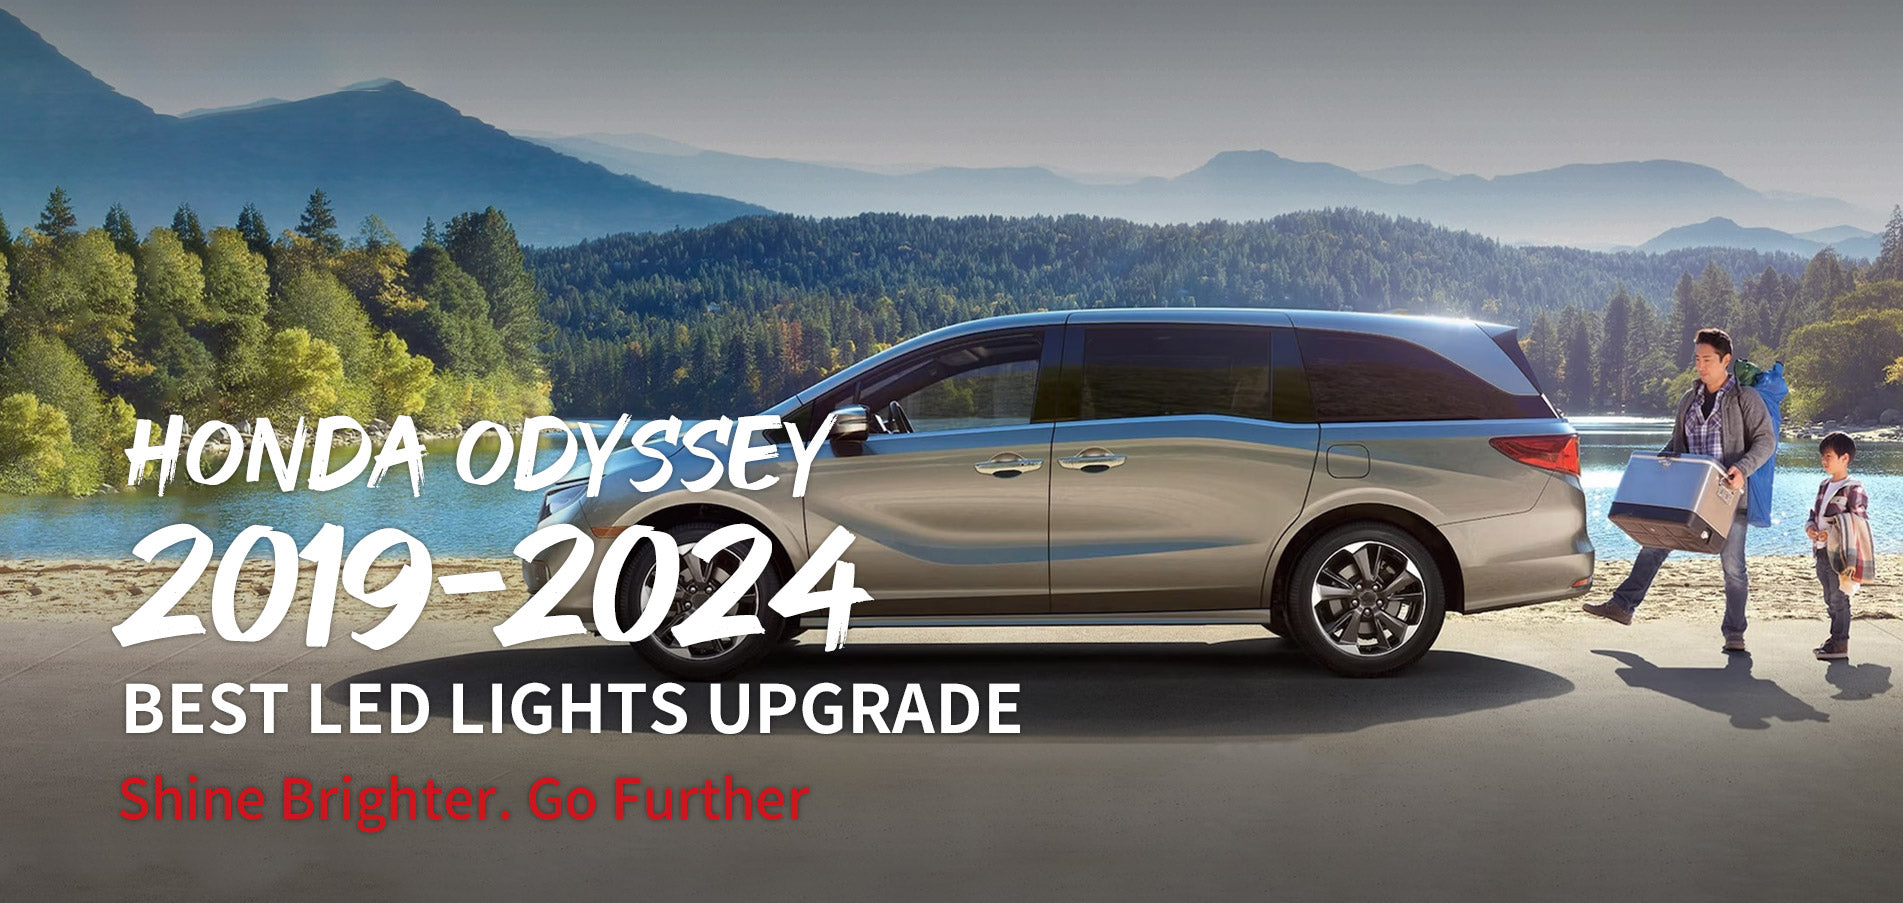 Honda Odyssey 2019-2024 banner